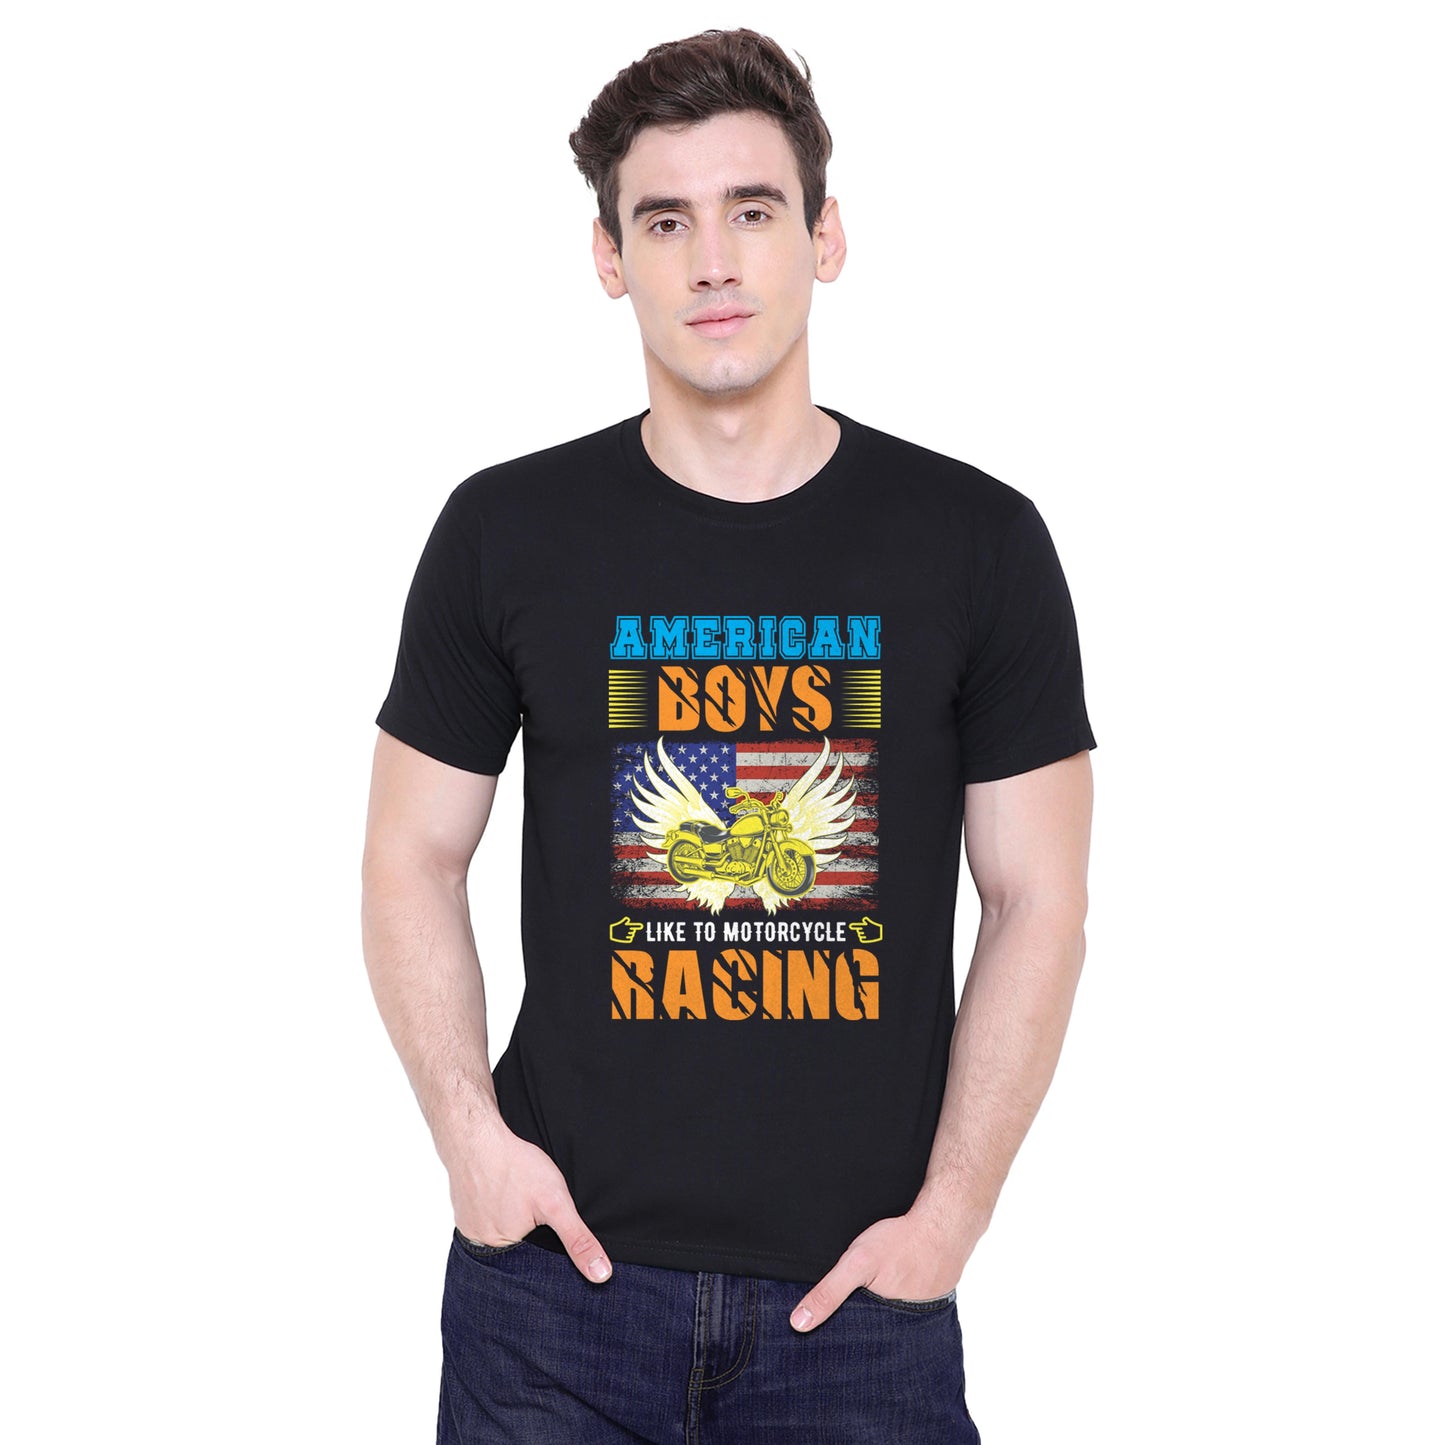 American boys like motorcycle racing quote Biker t shirts - Black